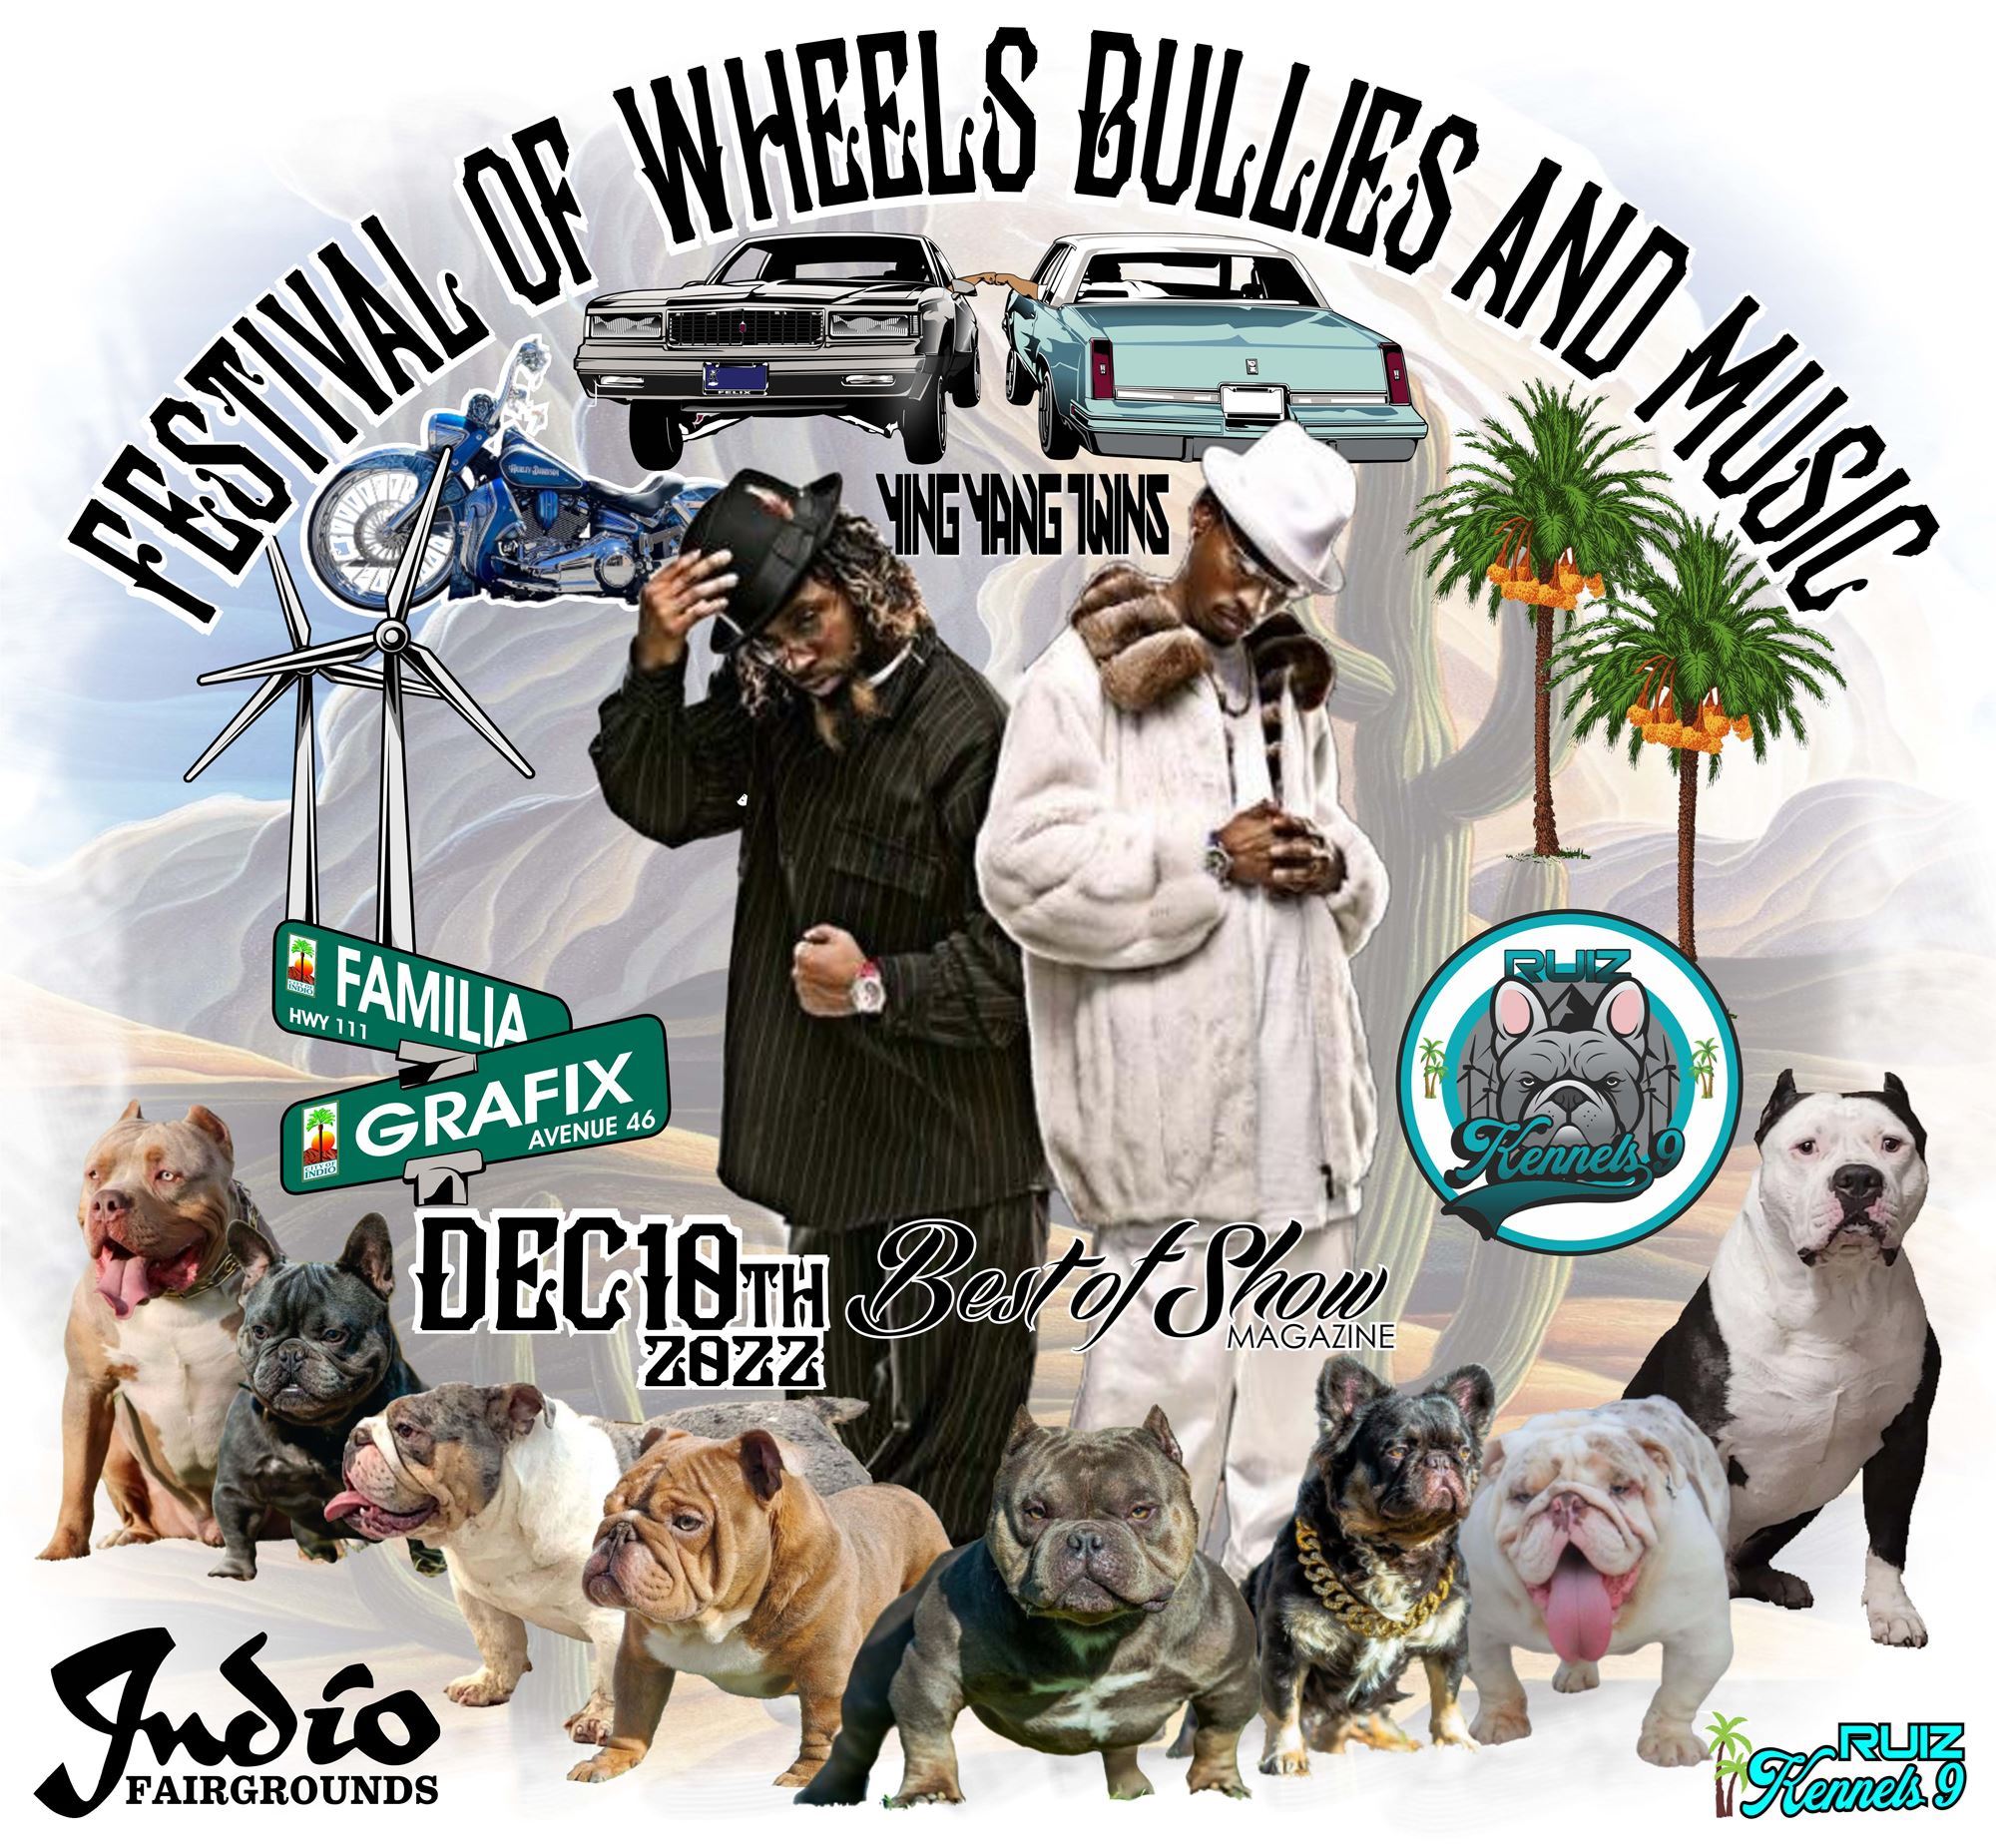 Festival of Wheels Bullies & Music